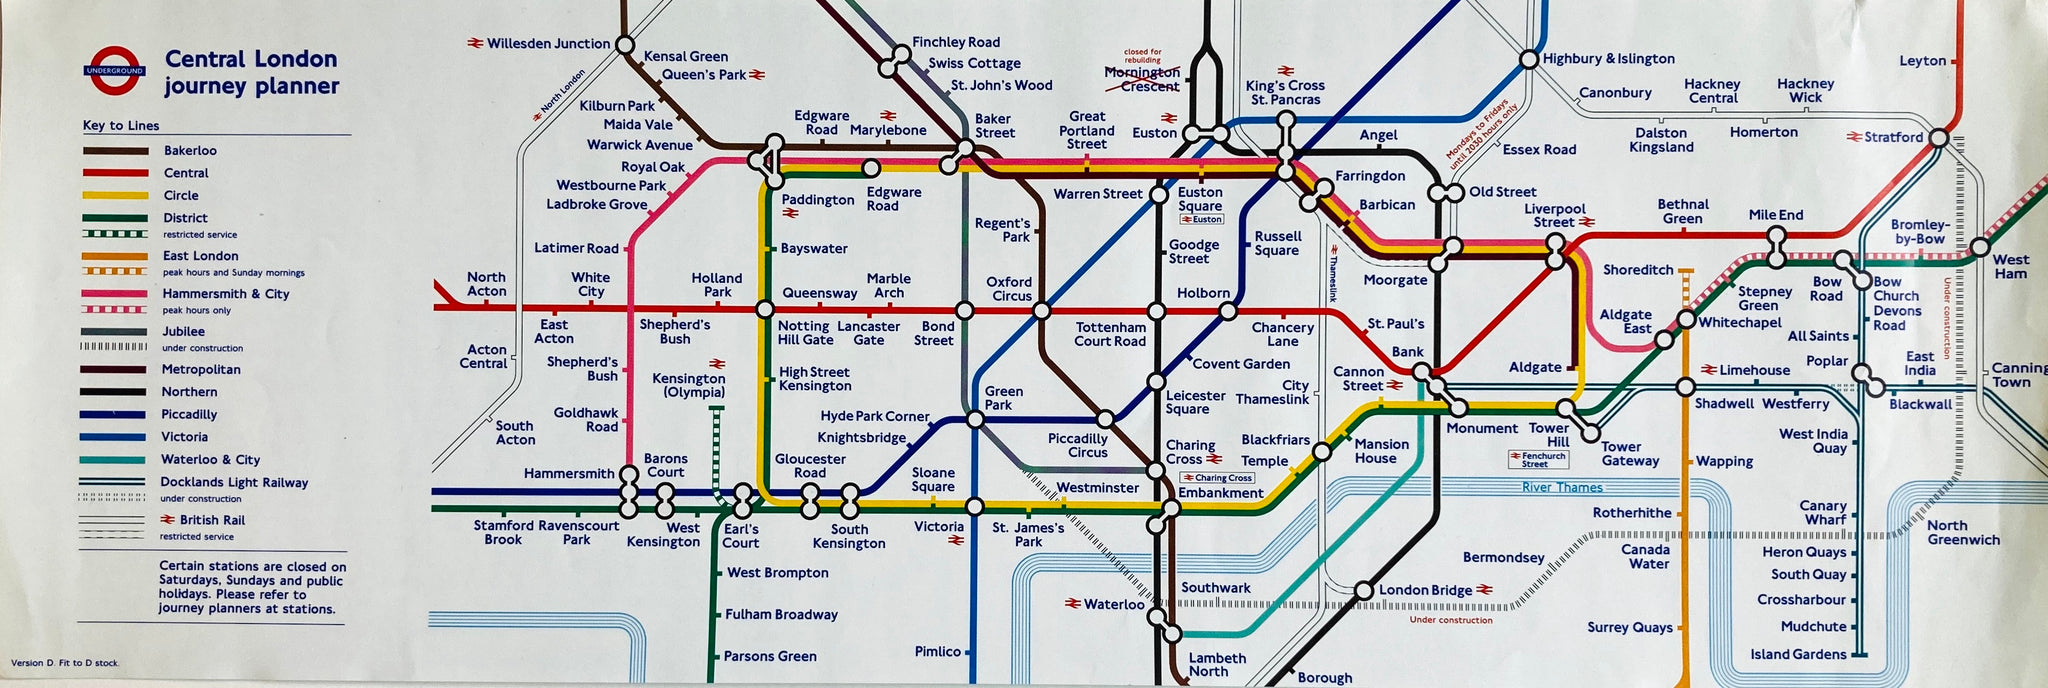 London Underground Carriage Map